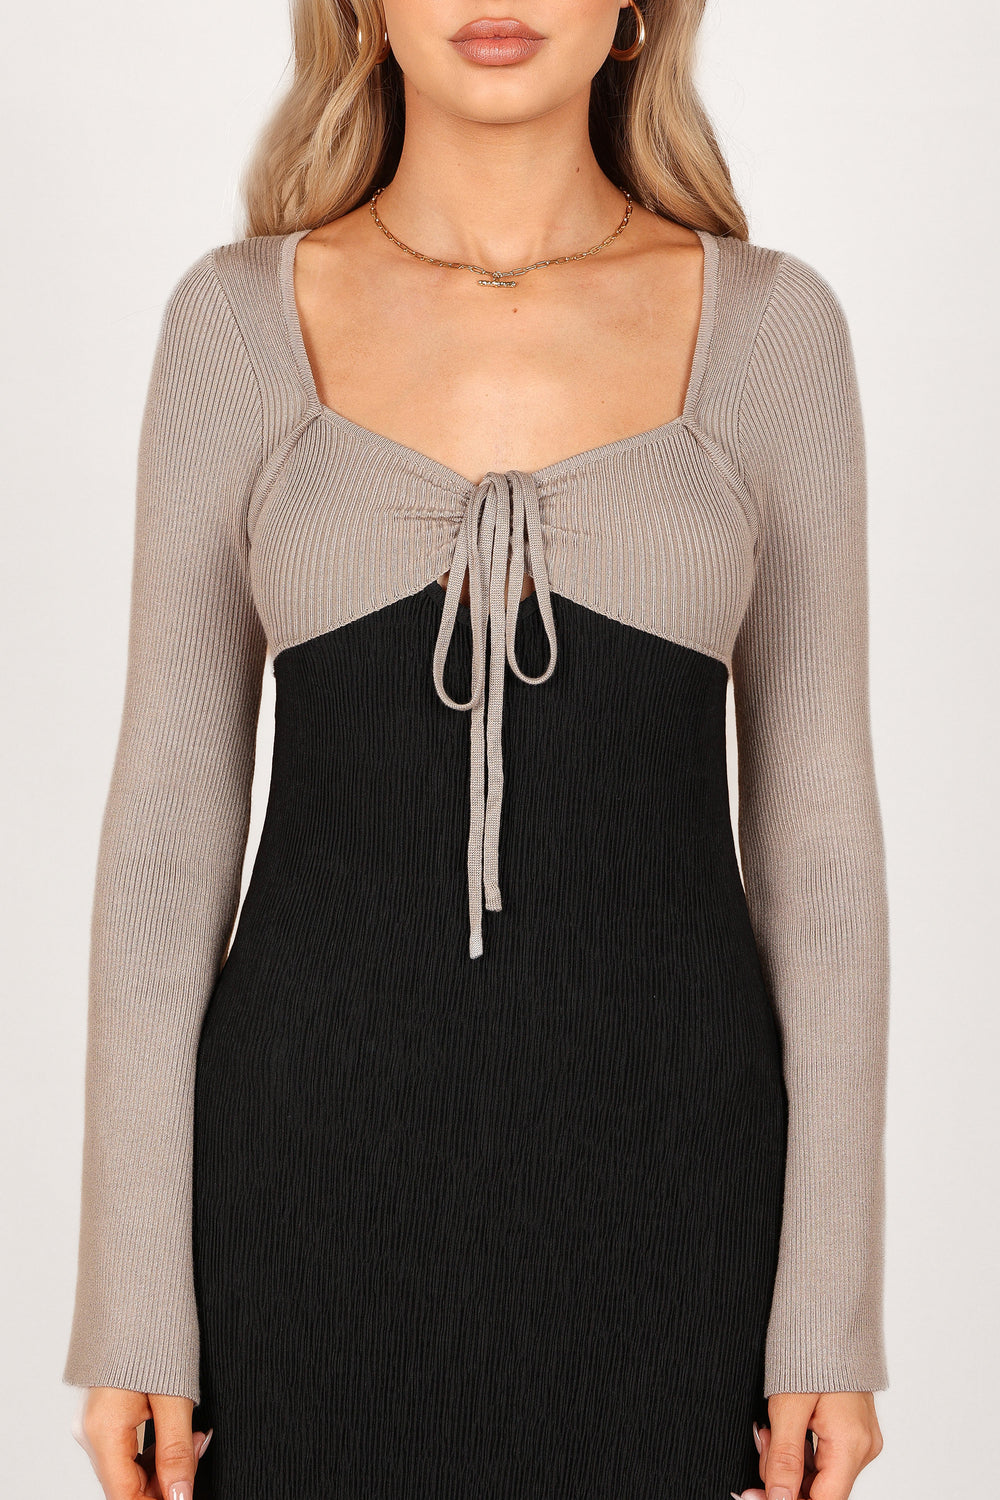 Petal and Pup USA DRESSES Lirique Long Sleeve Maxi Dress - Black/Grey